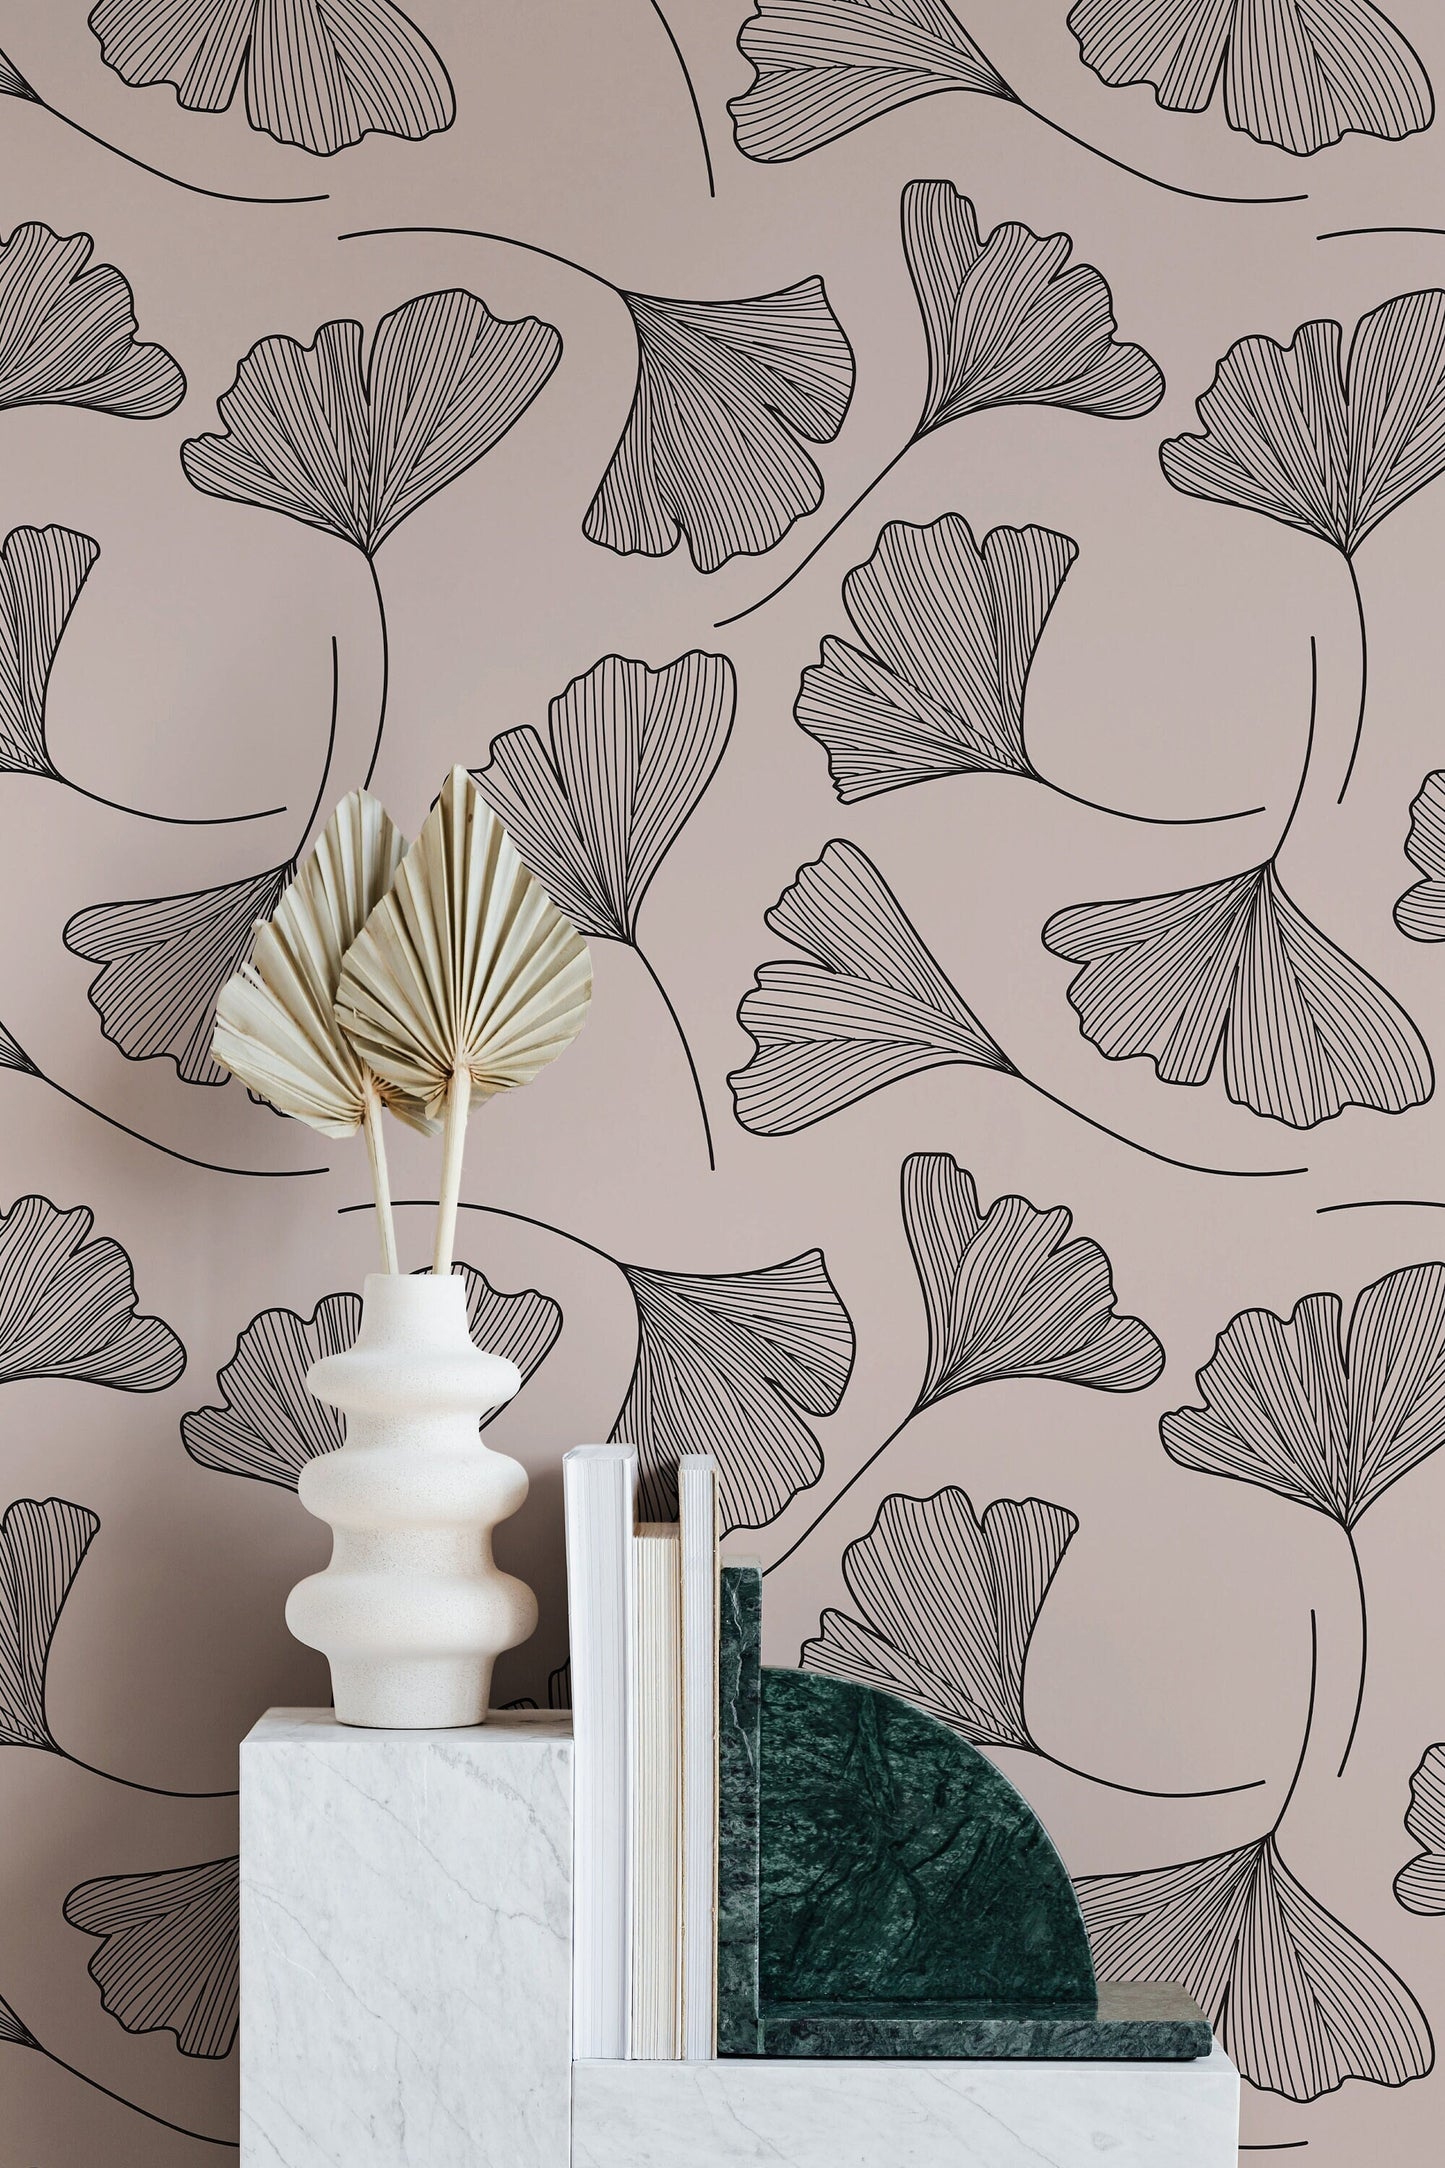 Botanical Leaf Peel and Stick Removable Wallpaper, Boho Nature Wall Art, Custom Wall Decal, Black & White Minimalistic Self Adhesive